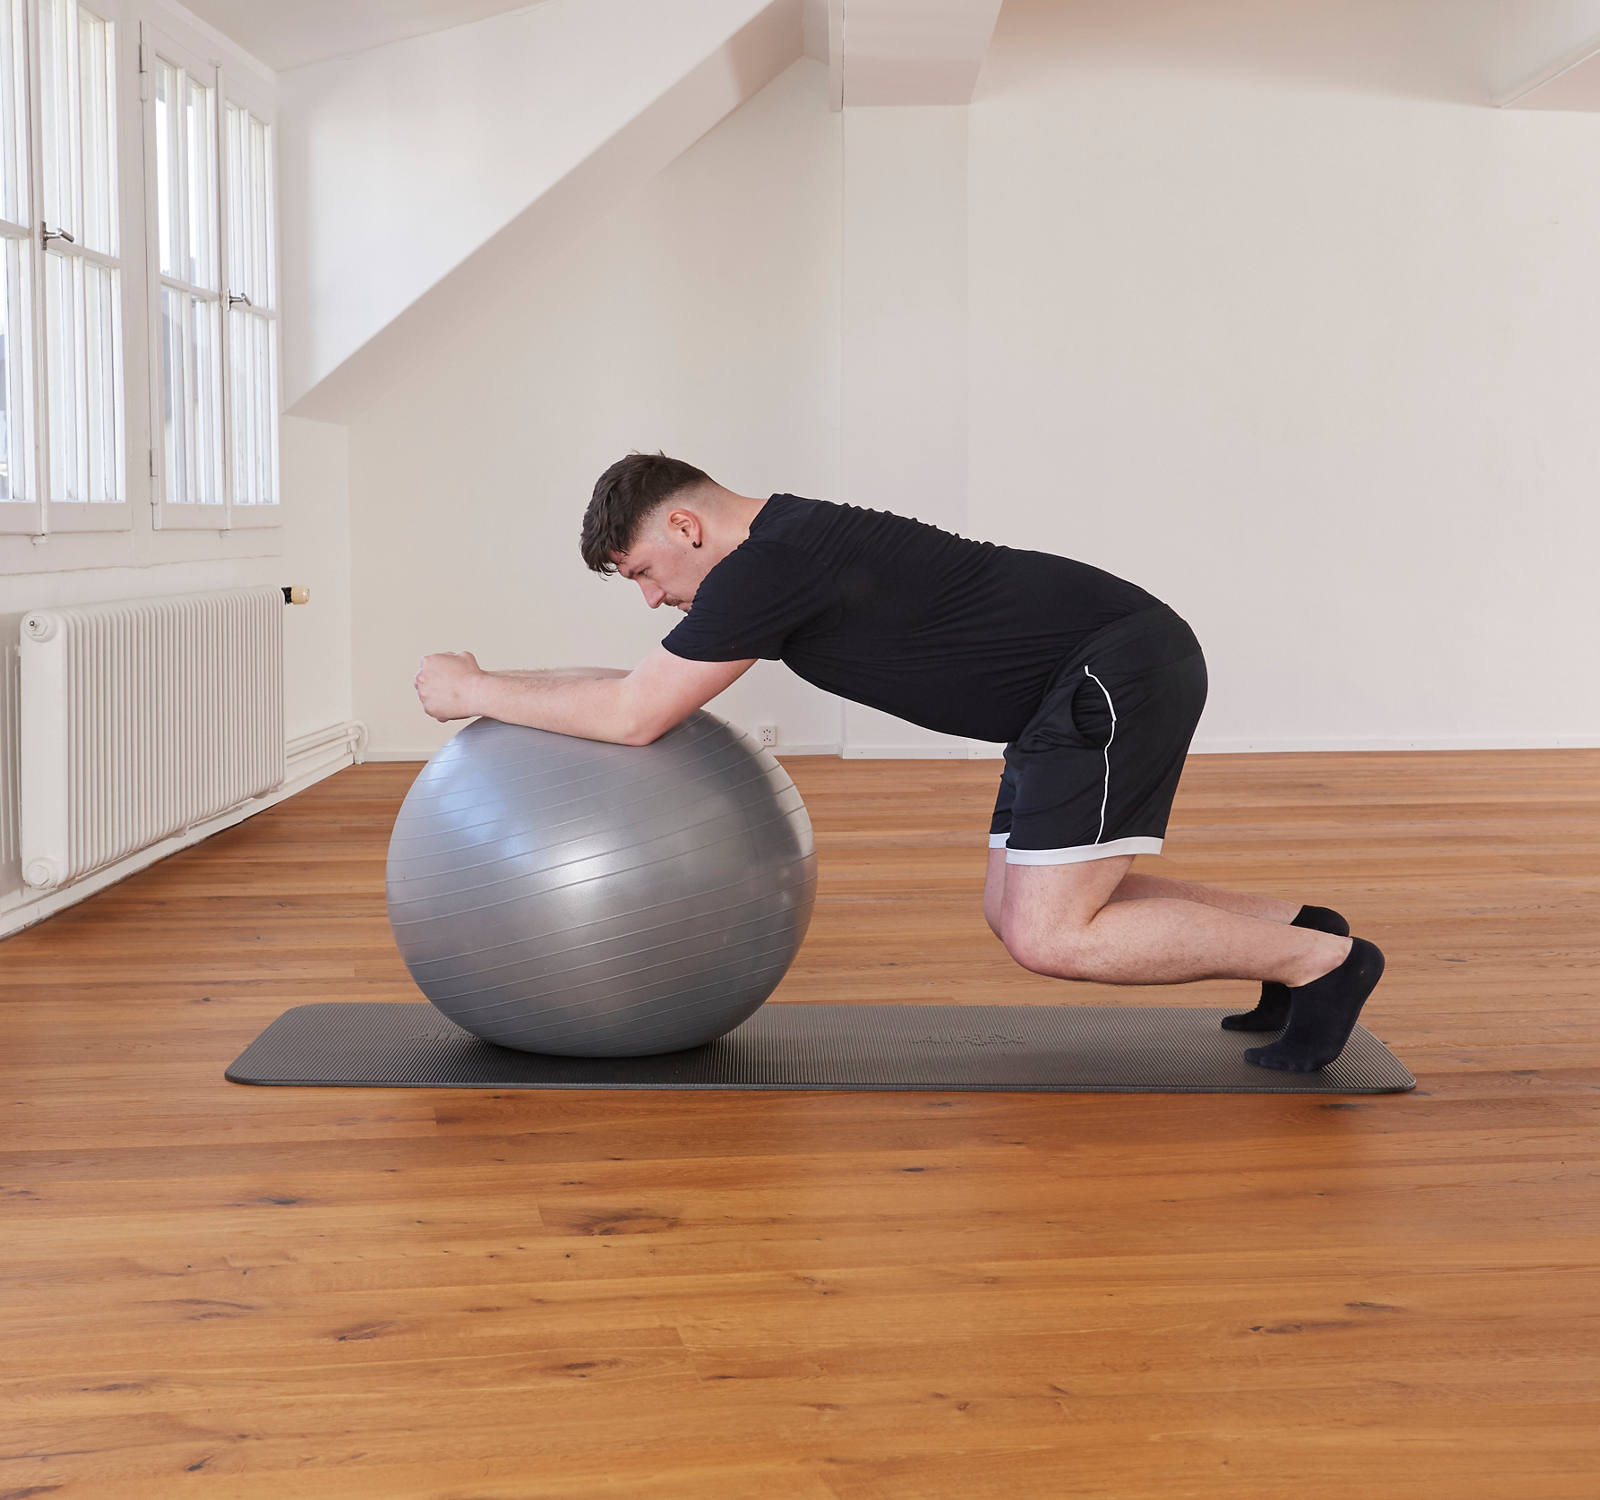 5 exercices pour sculpter son corps avec un petit ballon de gym